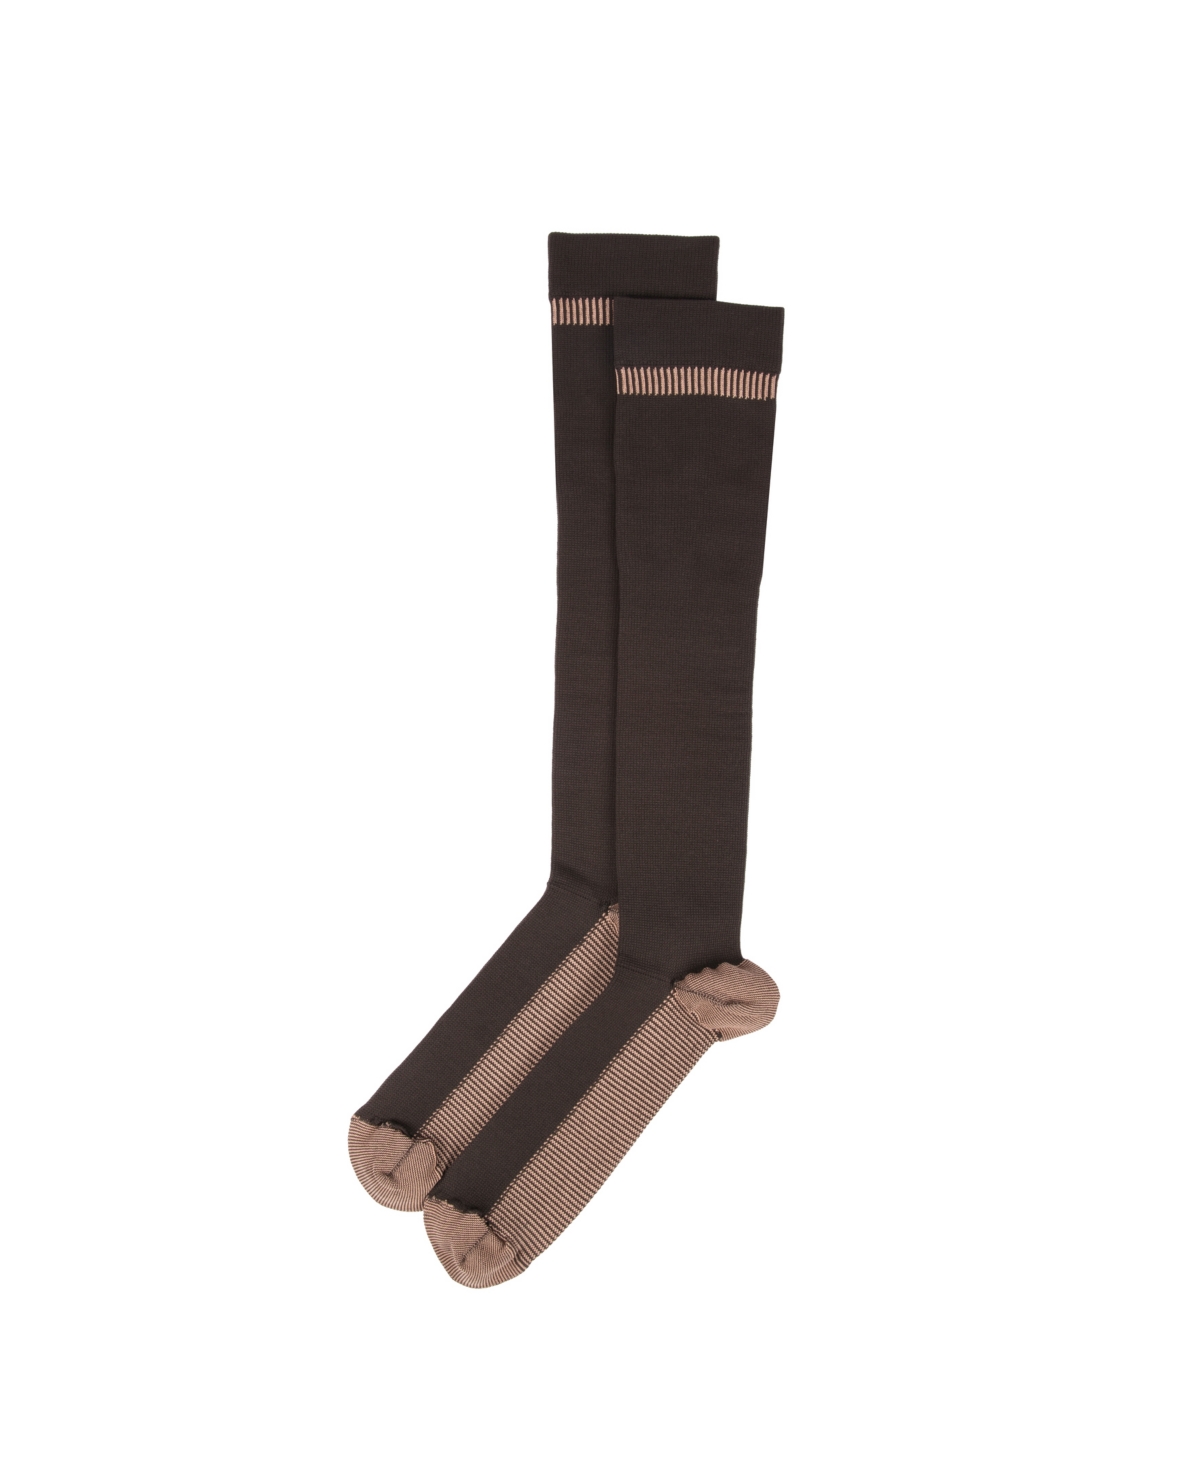 Copper Infused Compression Socks - Large - Dark Brown